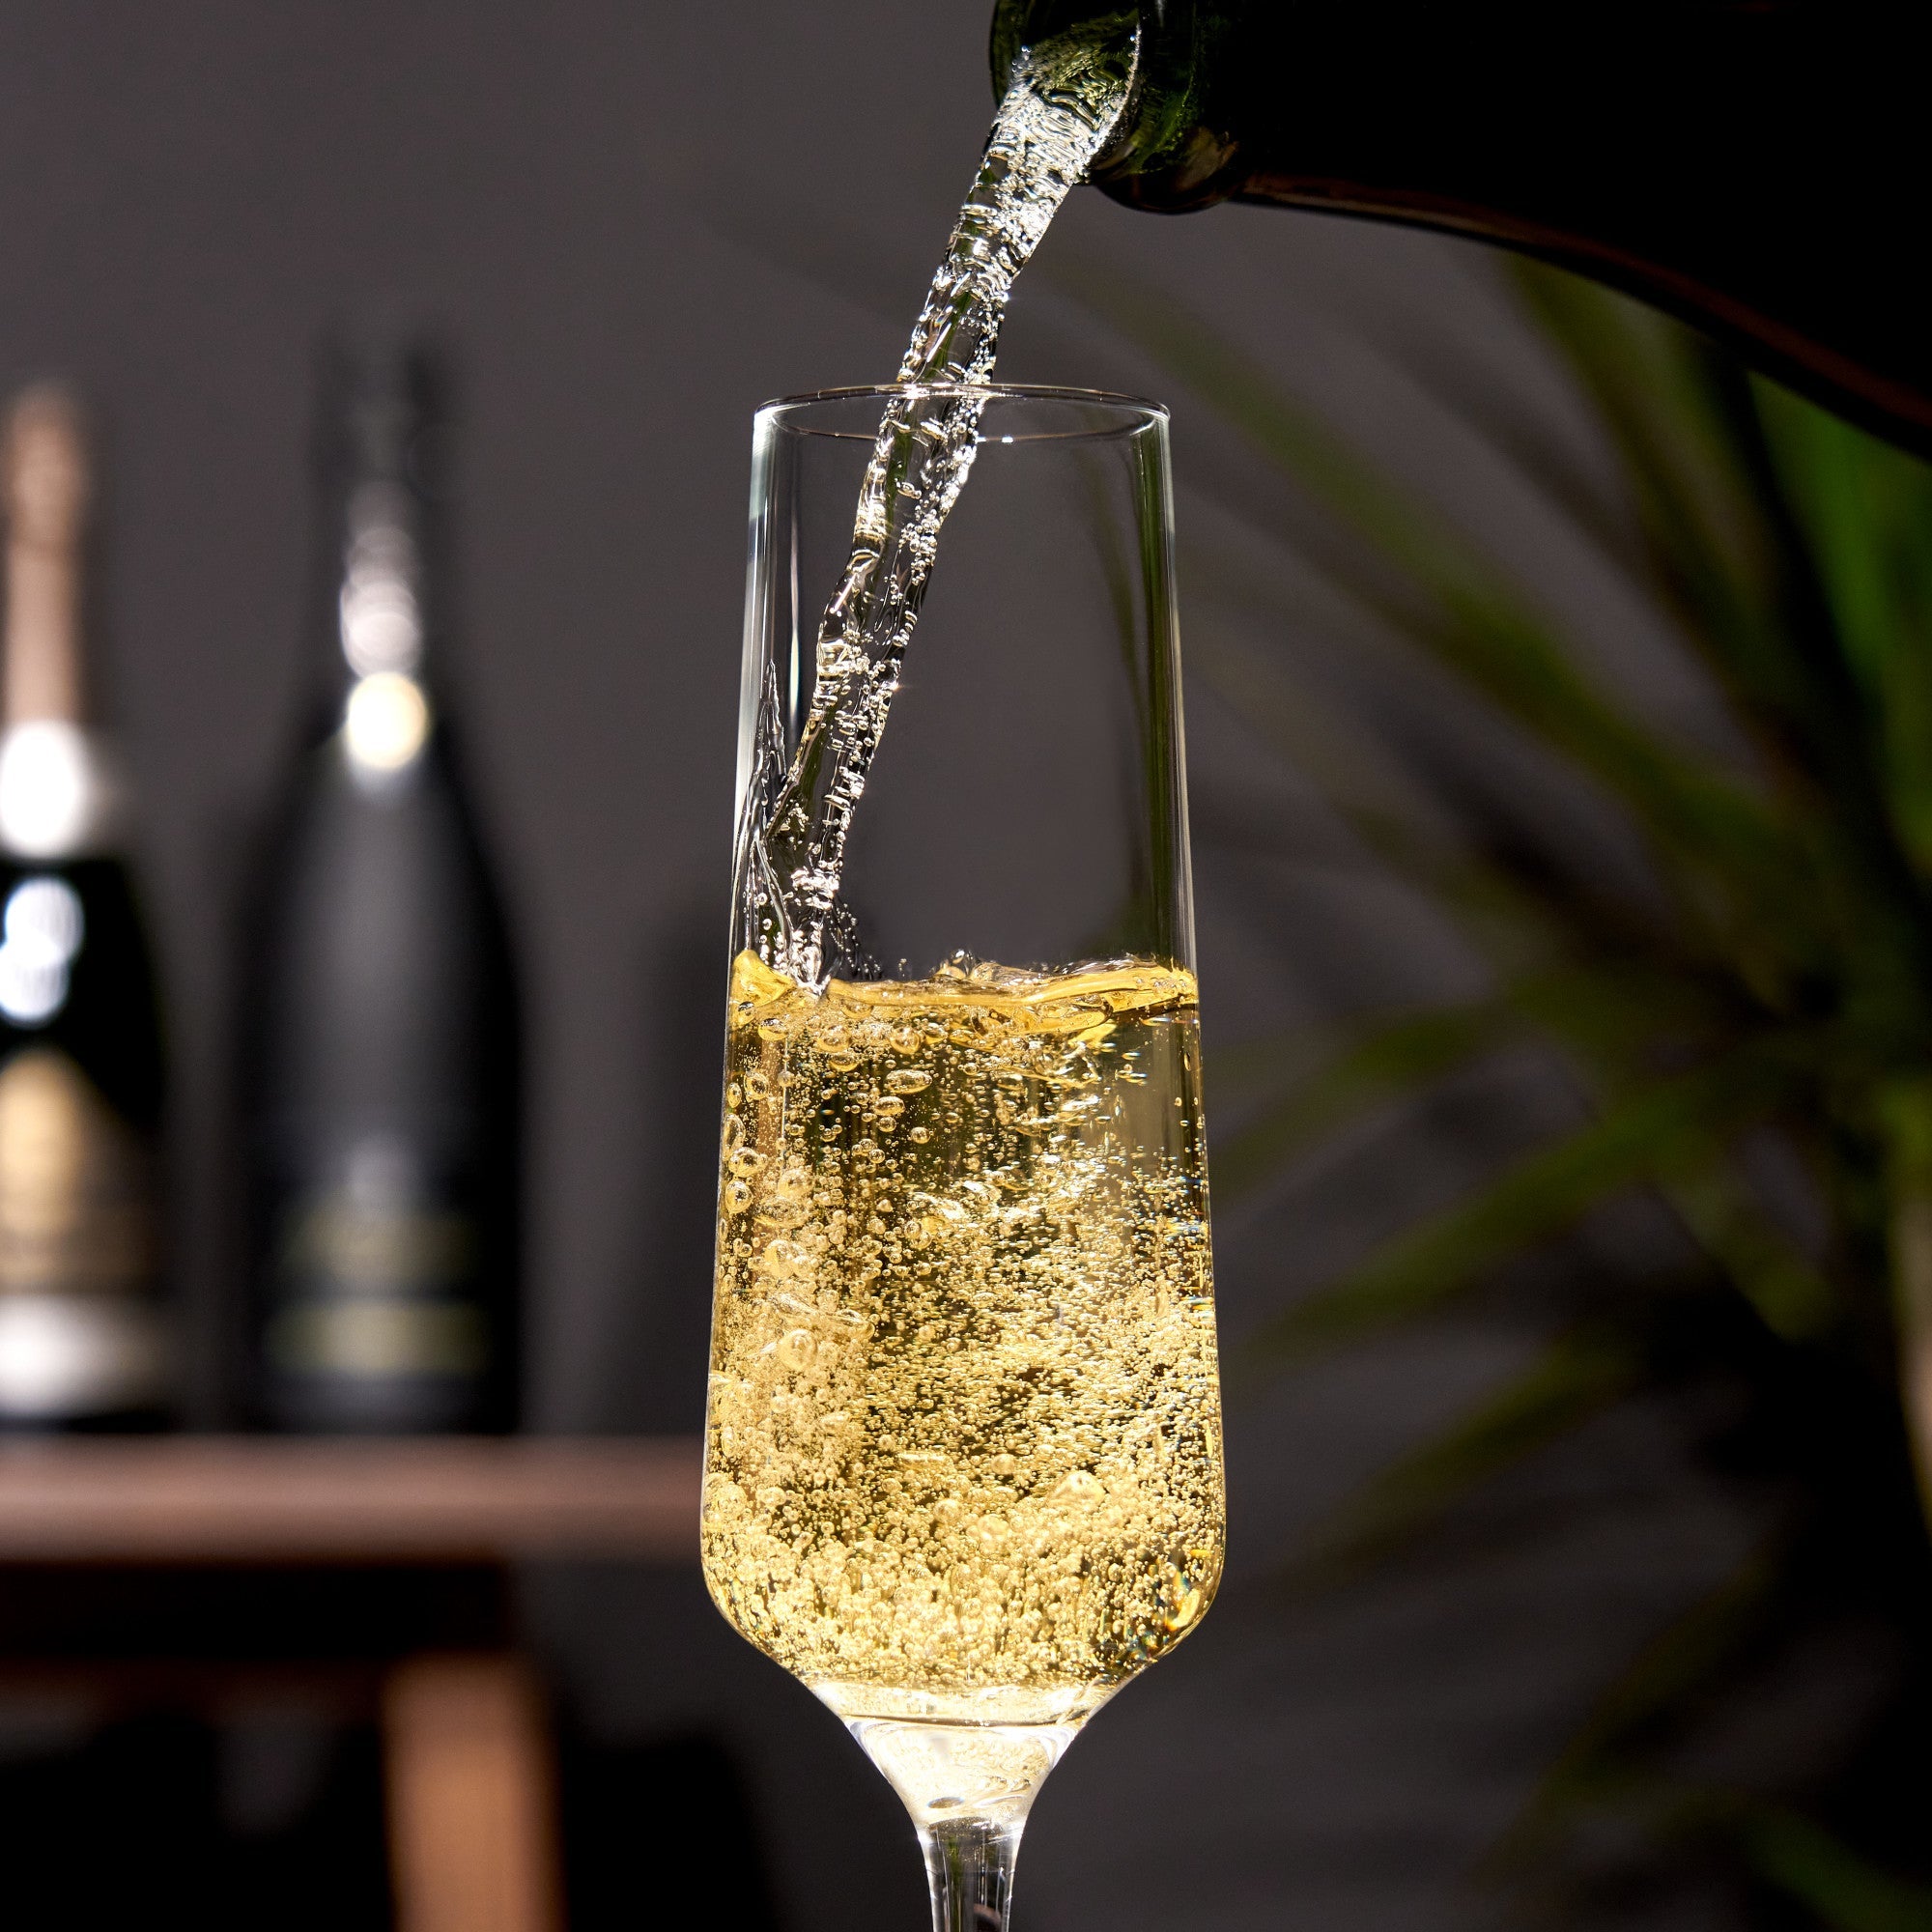 European Crystal Champagne Flutes by Viski® (10103) Drinkware Viski